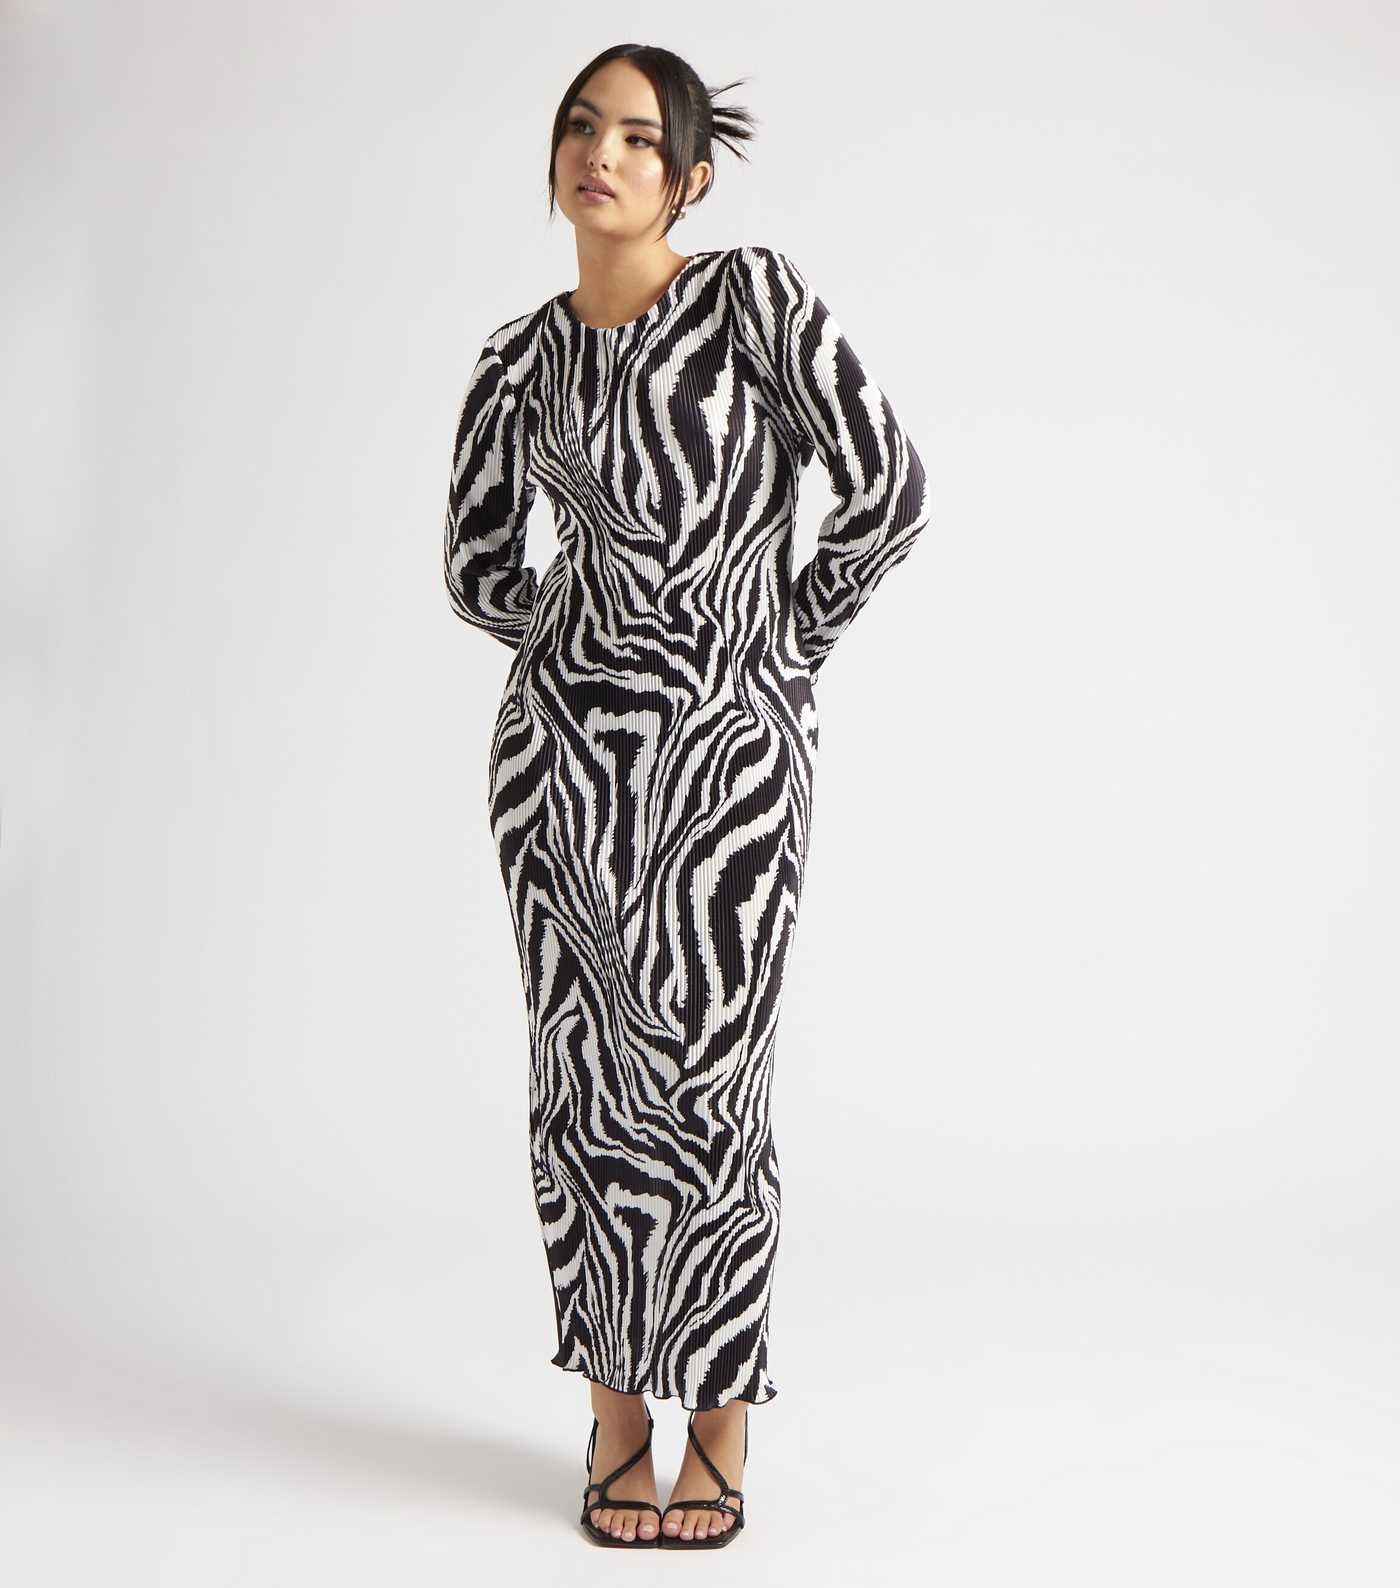 Urban Bliss Black Zebra Print Plissé Maxi Dress
						
						Add to Saved Items
						Remove fro... | New Look (UK)